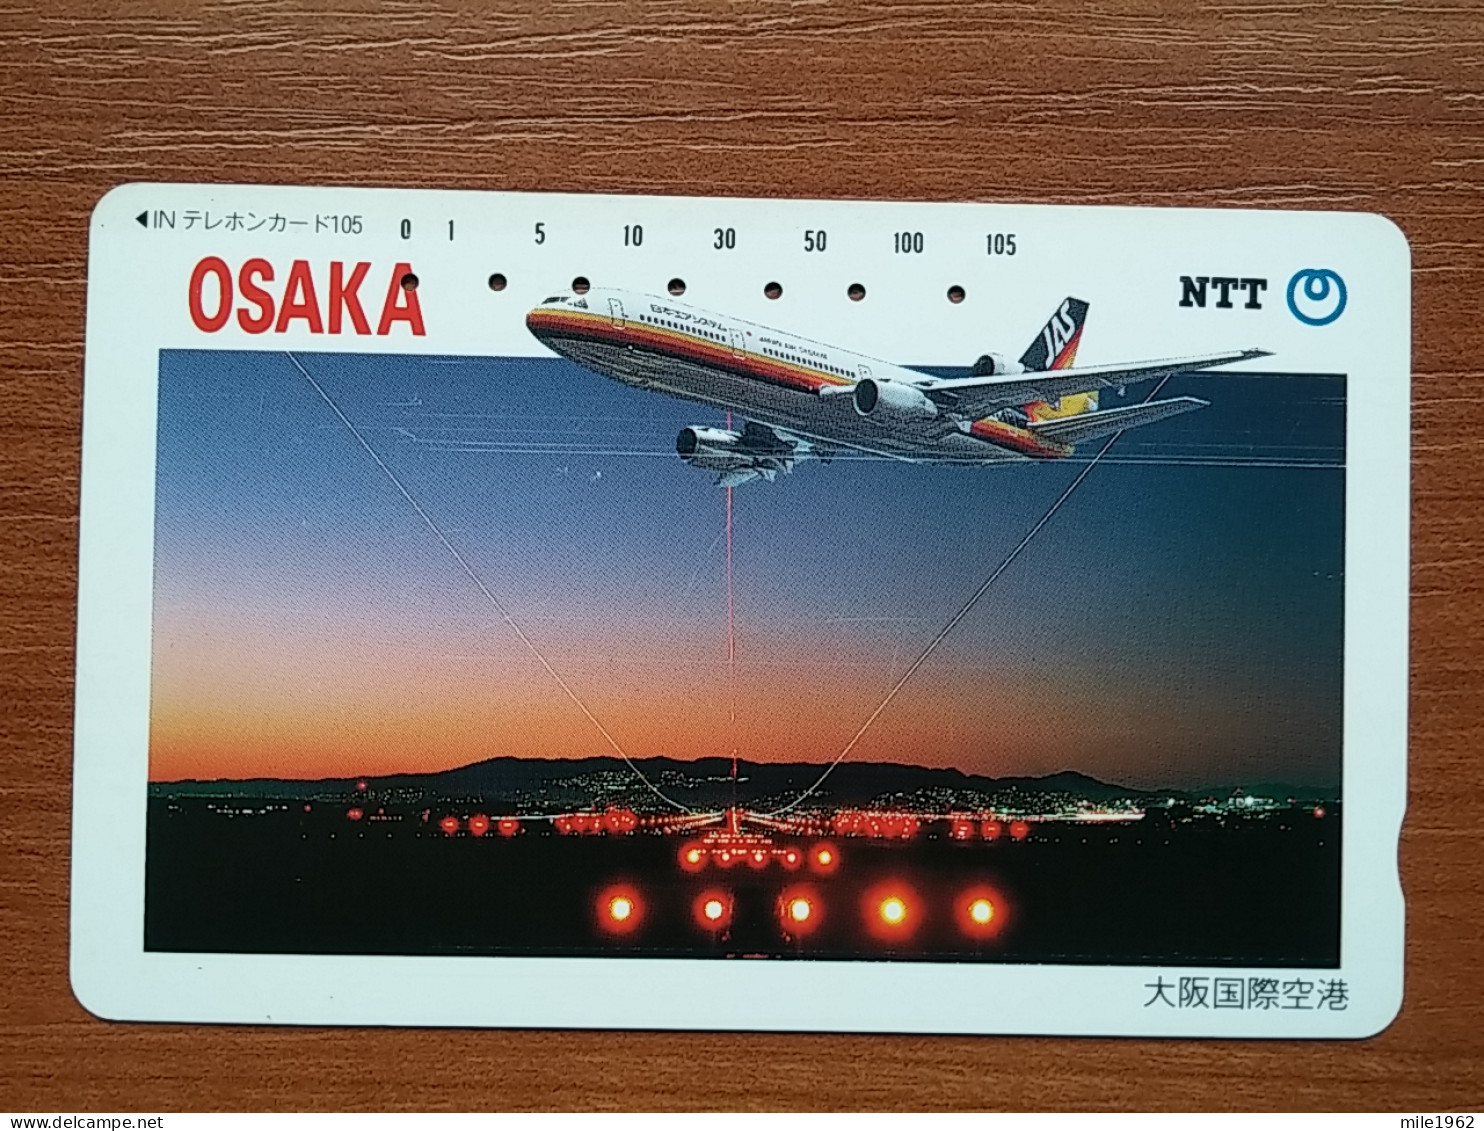 T-344 - JAPAN, TELECARD, PHONECARD,  Avion, Plane, Avio, NTT 331-061 - Avions